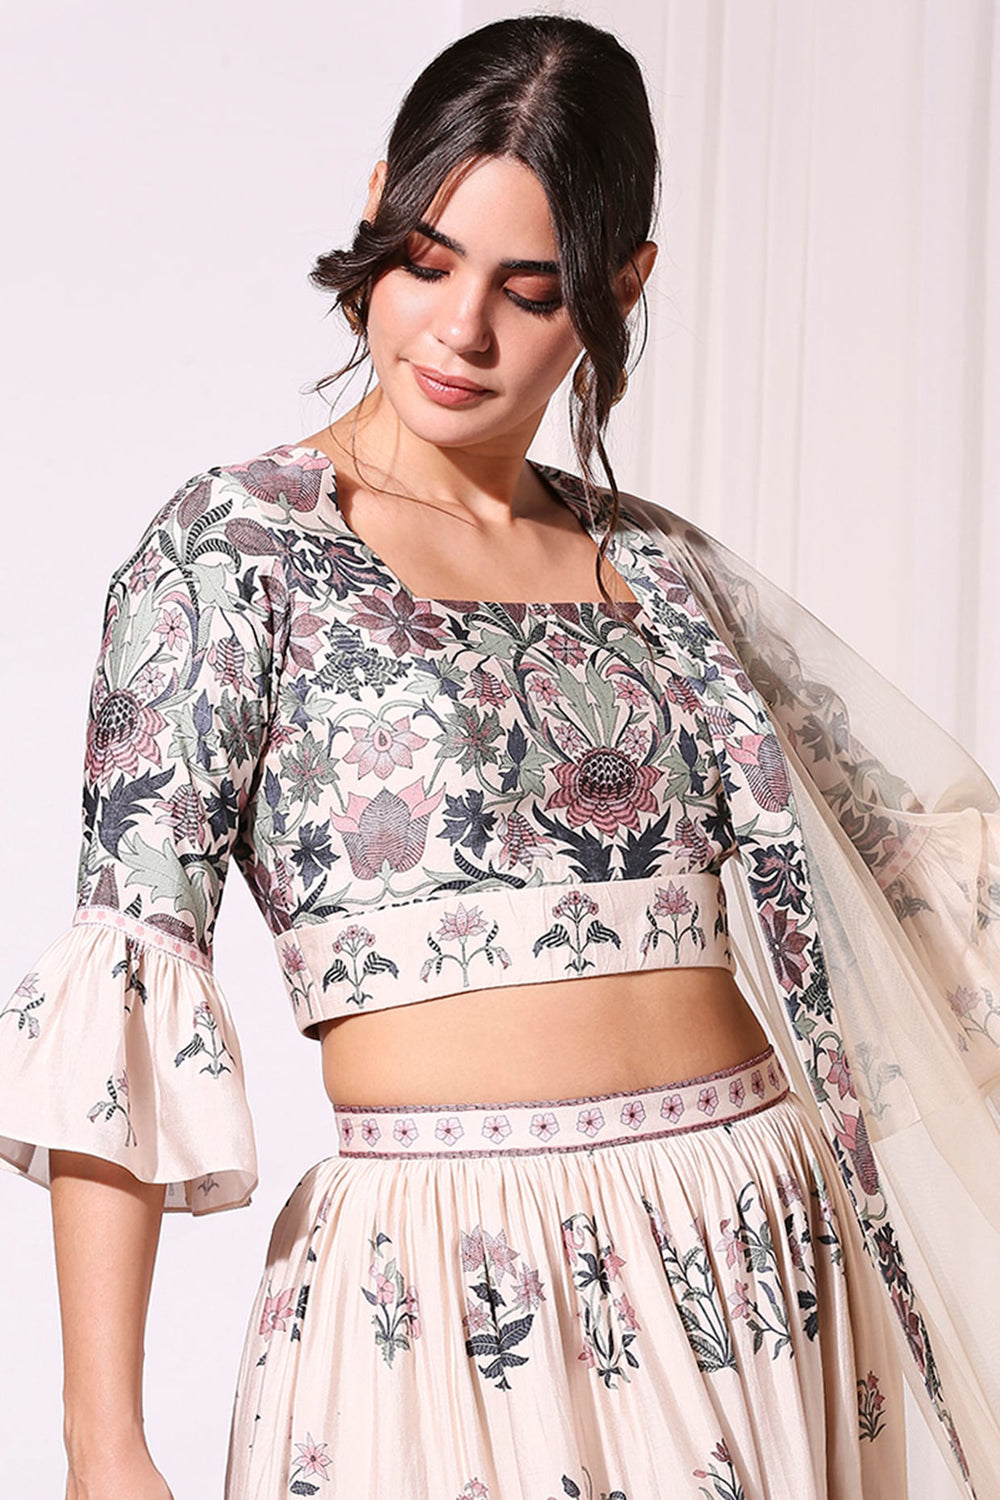 Pasrel Floral Printed Crop Top And Skirt